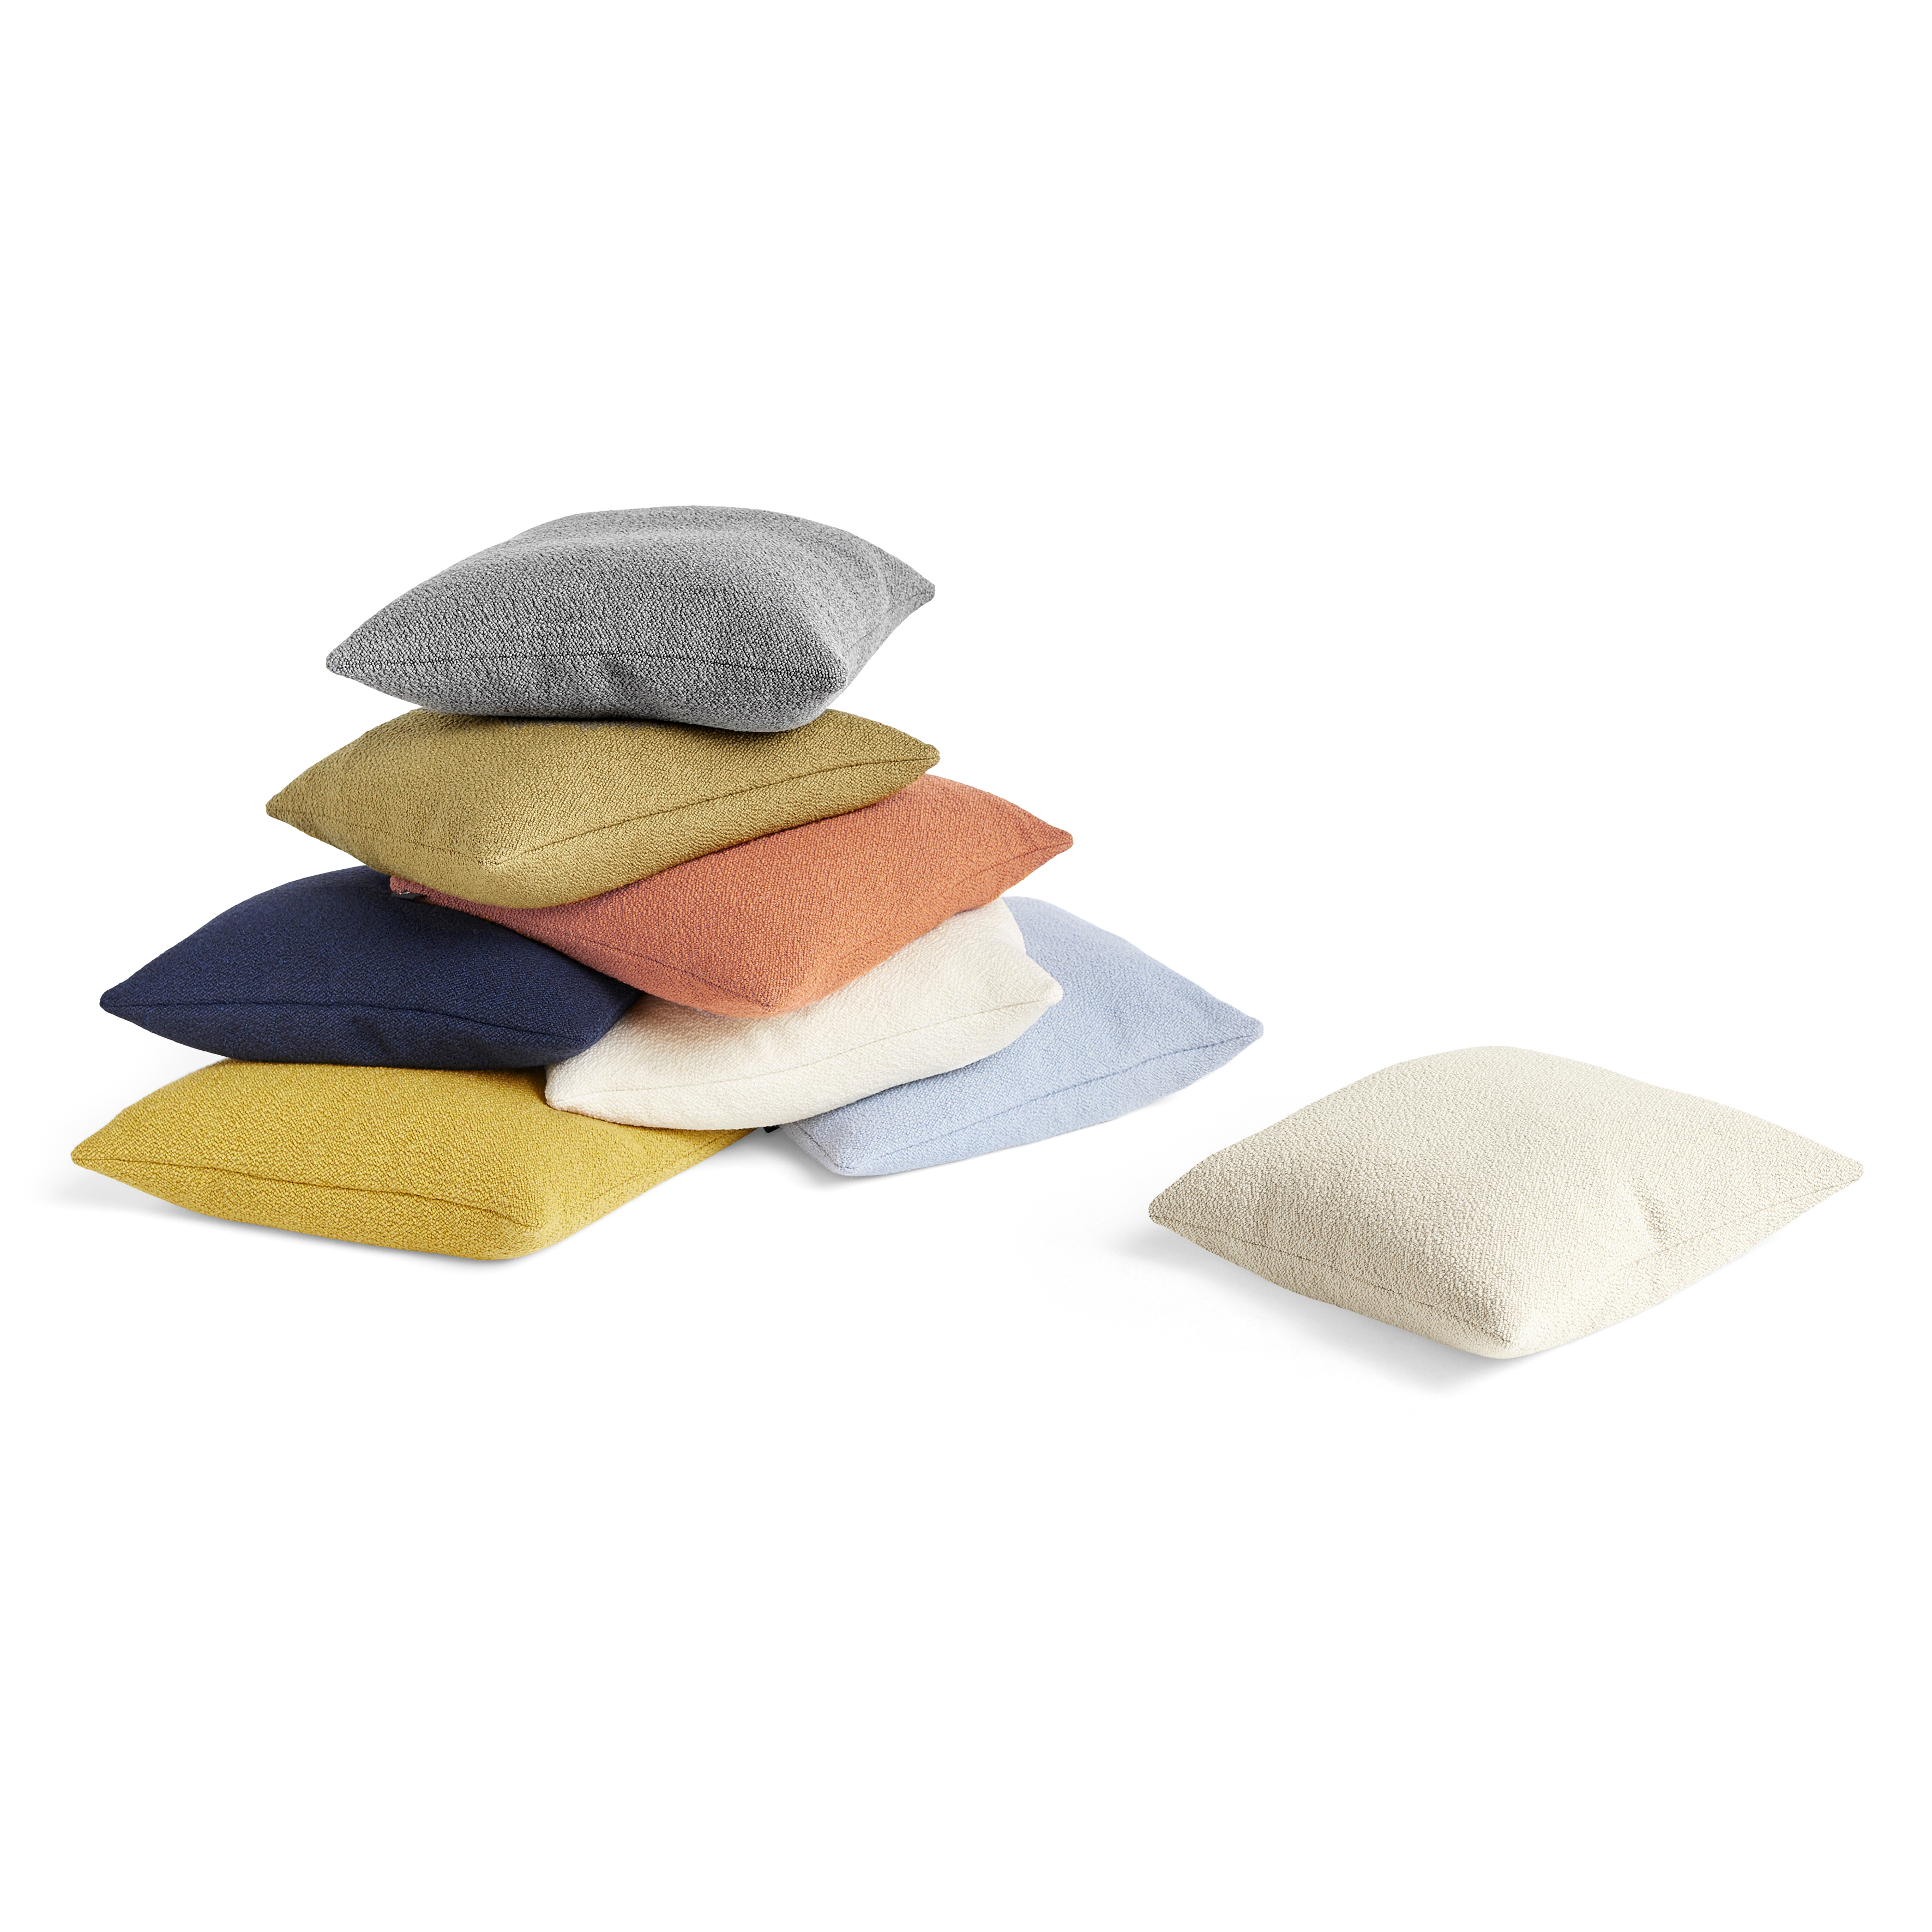 Texture cushion - Sand